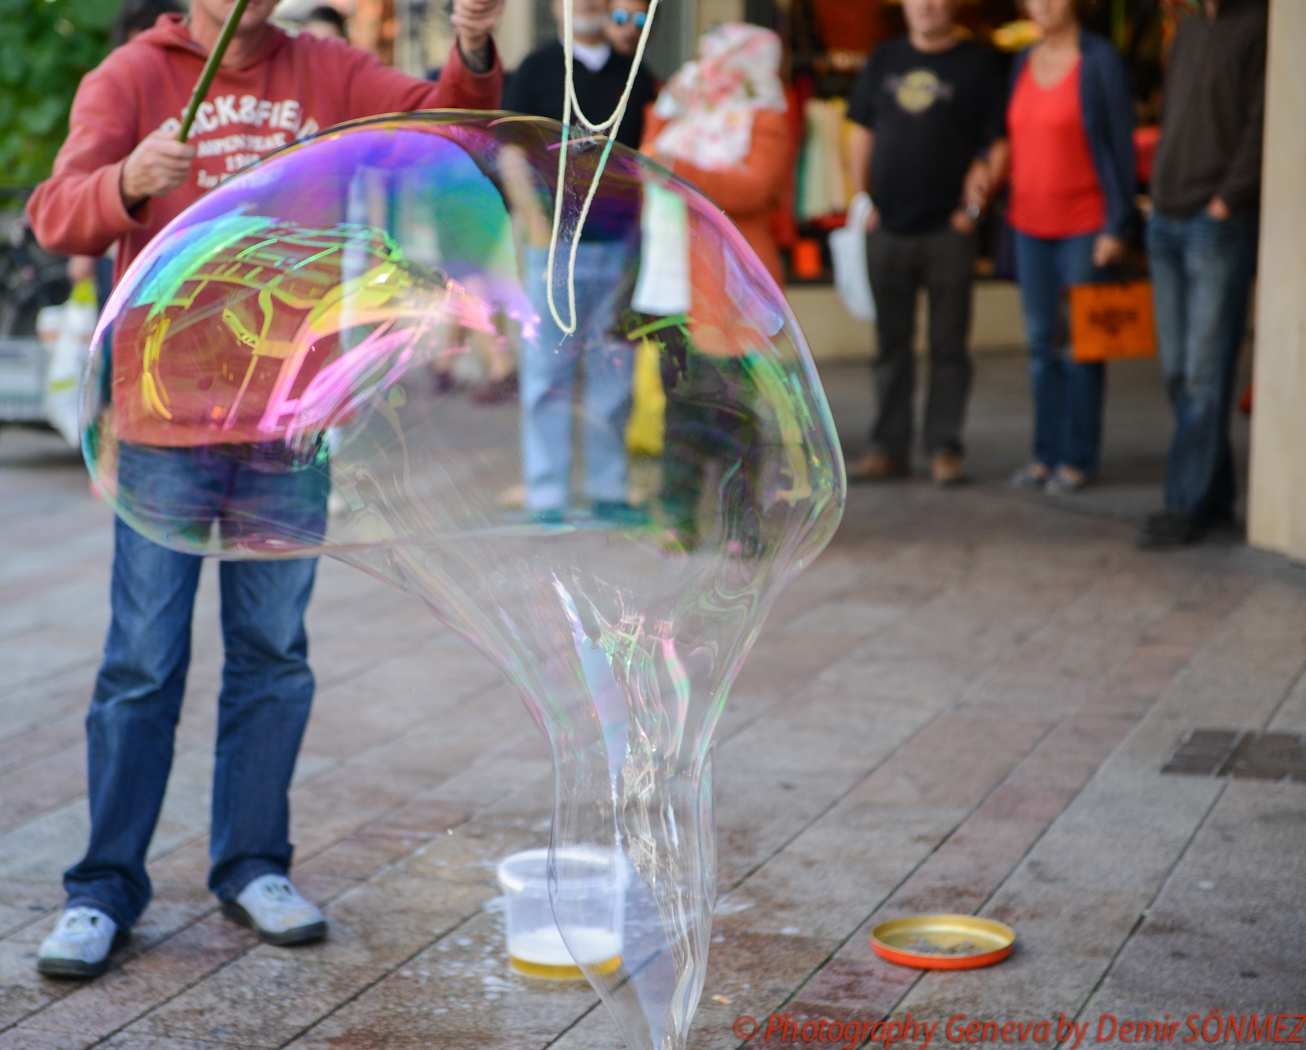 Les bulles  de savon dans  les rues basses-0099.jpg